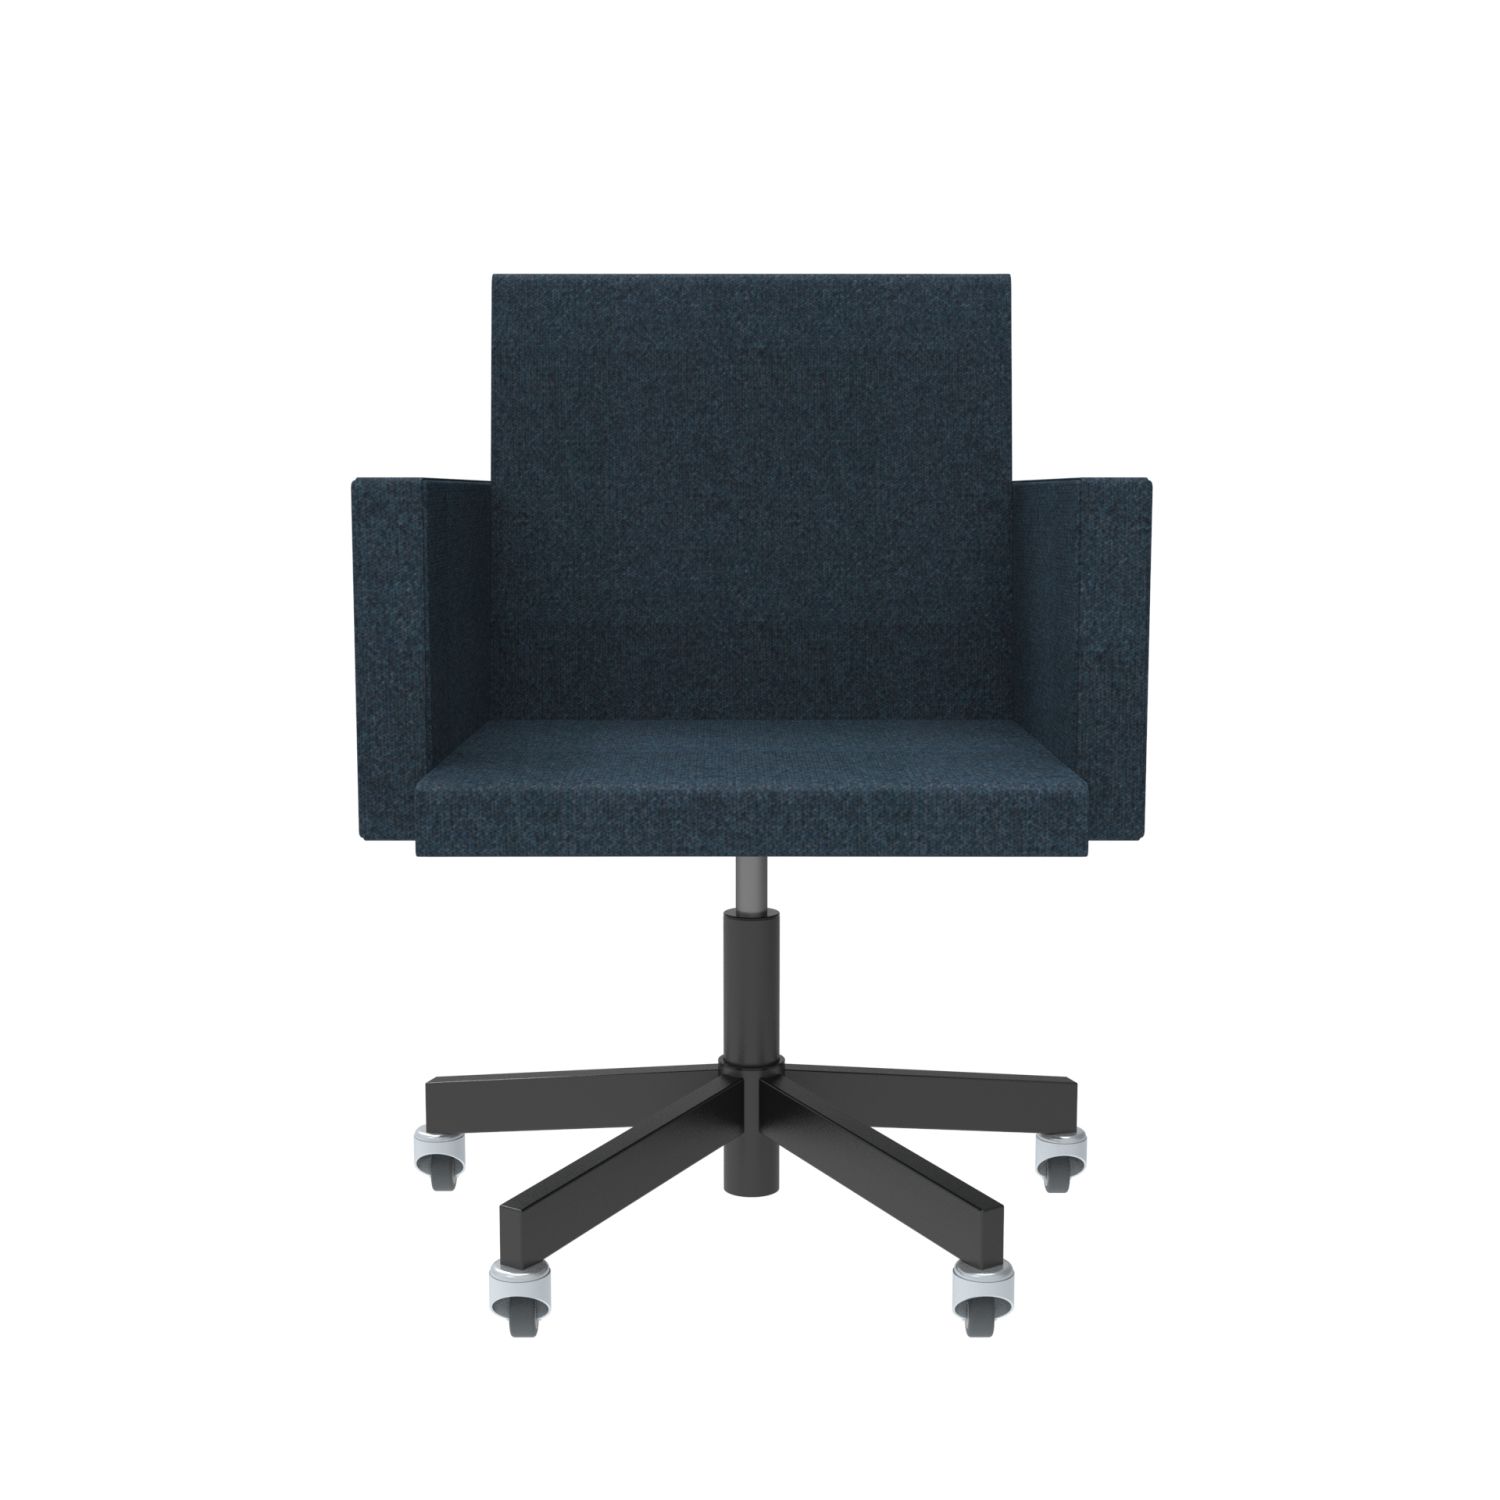 lensvelt atelier van lieshout office chair with armrests moss night blue 45 black ral9005 soft rolls